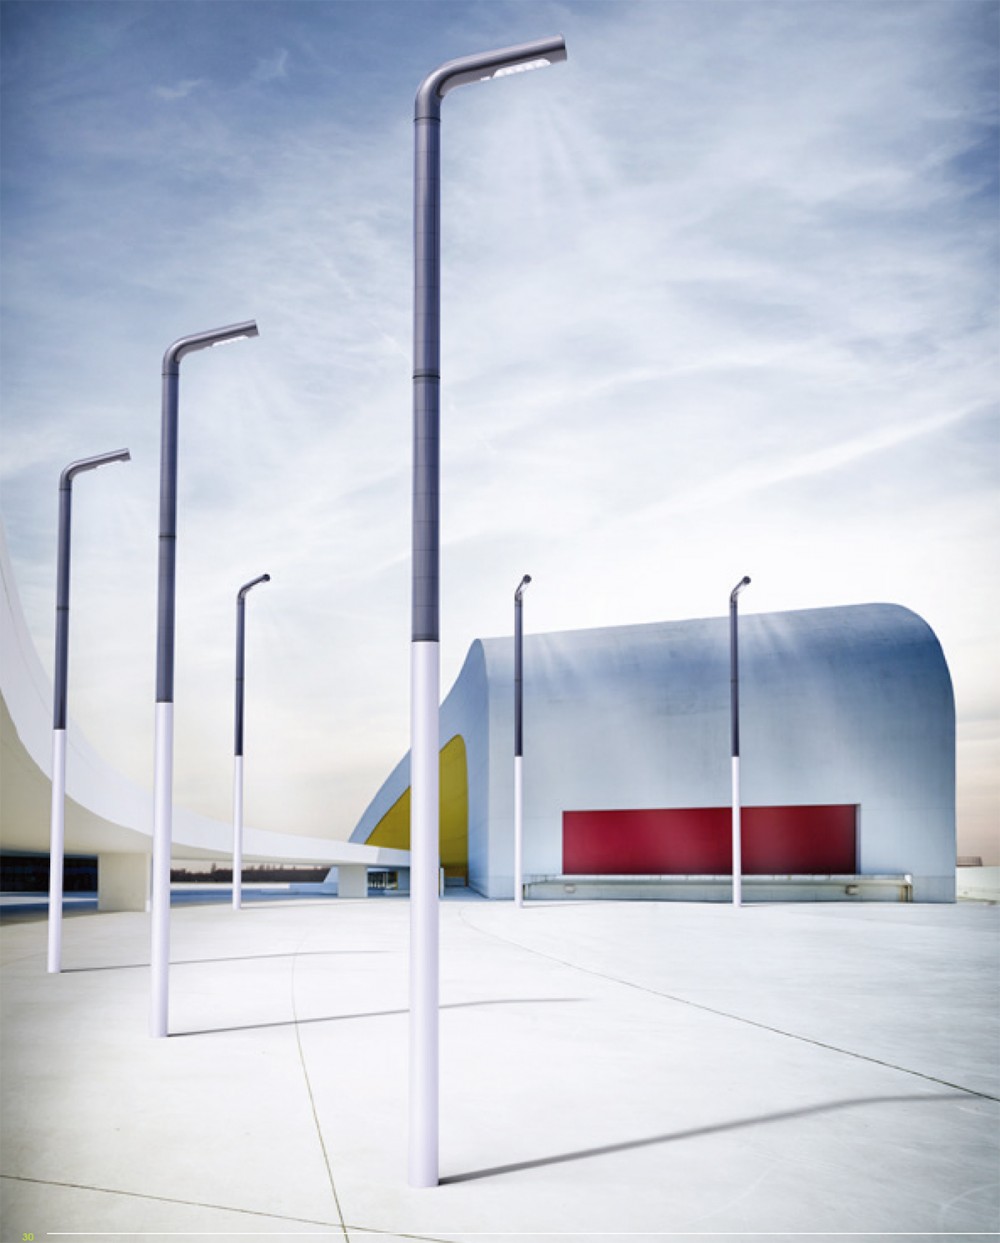 AMSU CREE LED Innovative Broad-Beamed Solar Street Light -COVERING 60 Ft DIA...